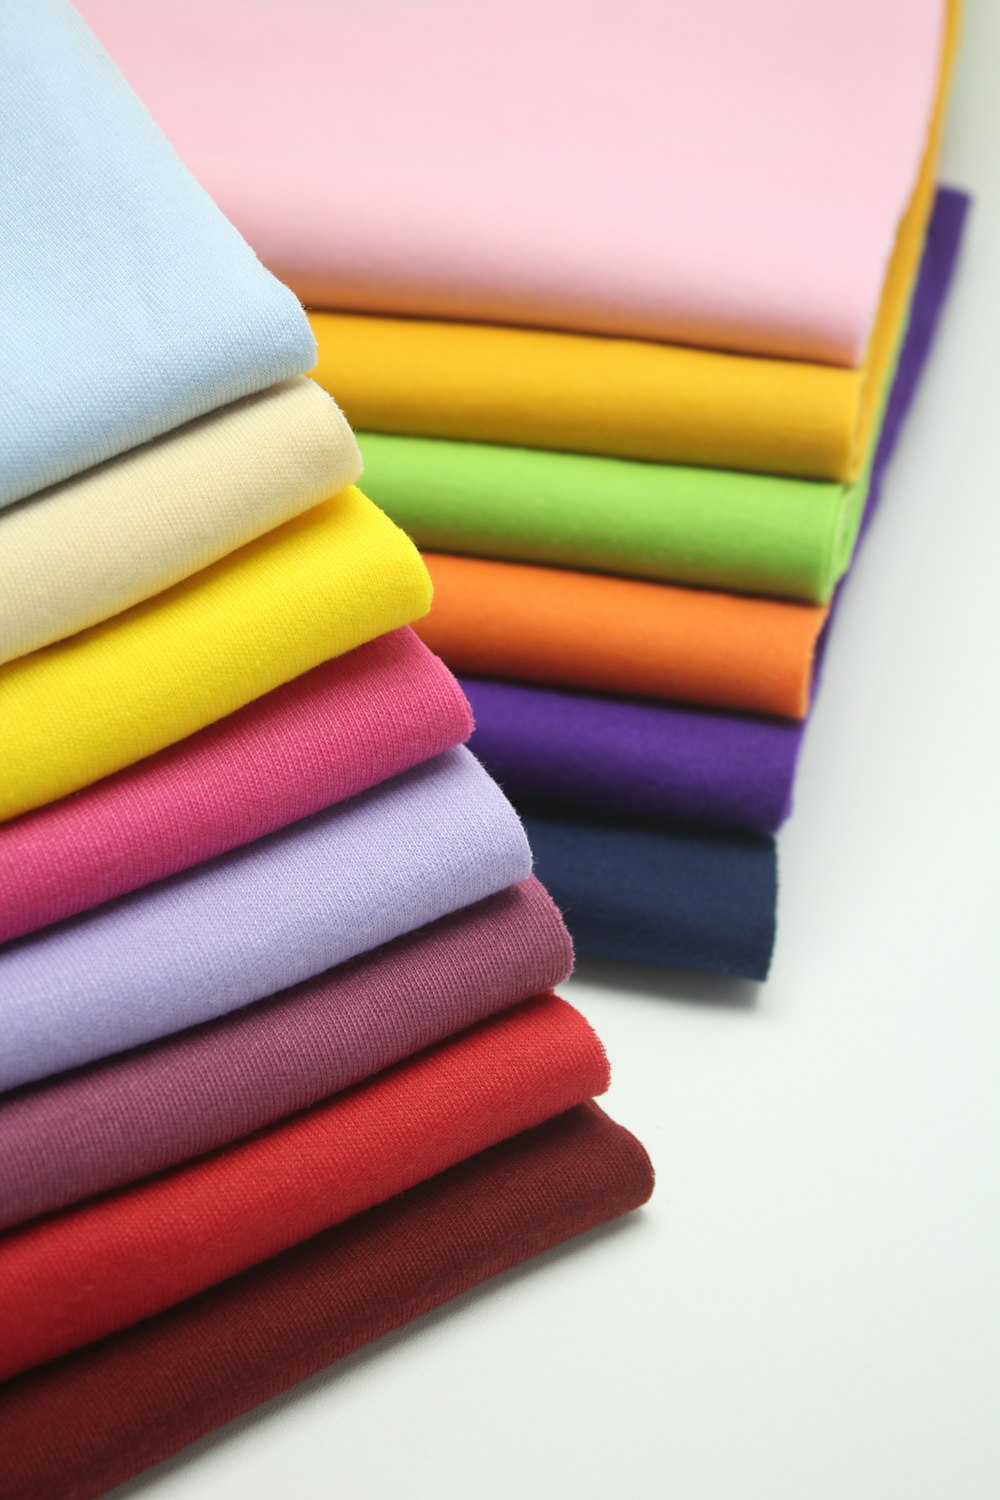 Stapel mehrfarbiger Textilien